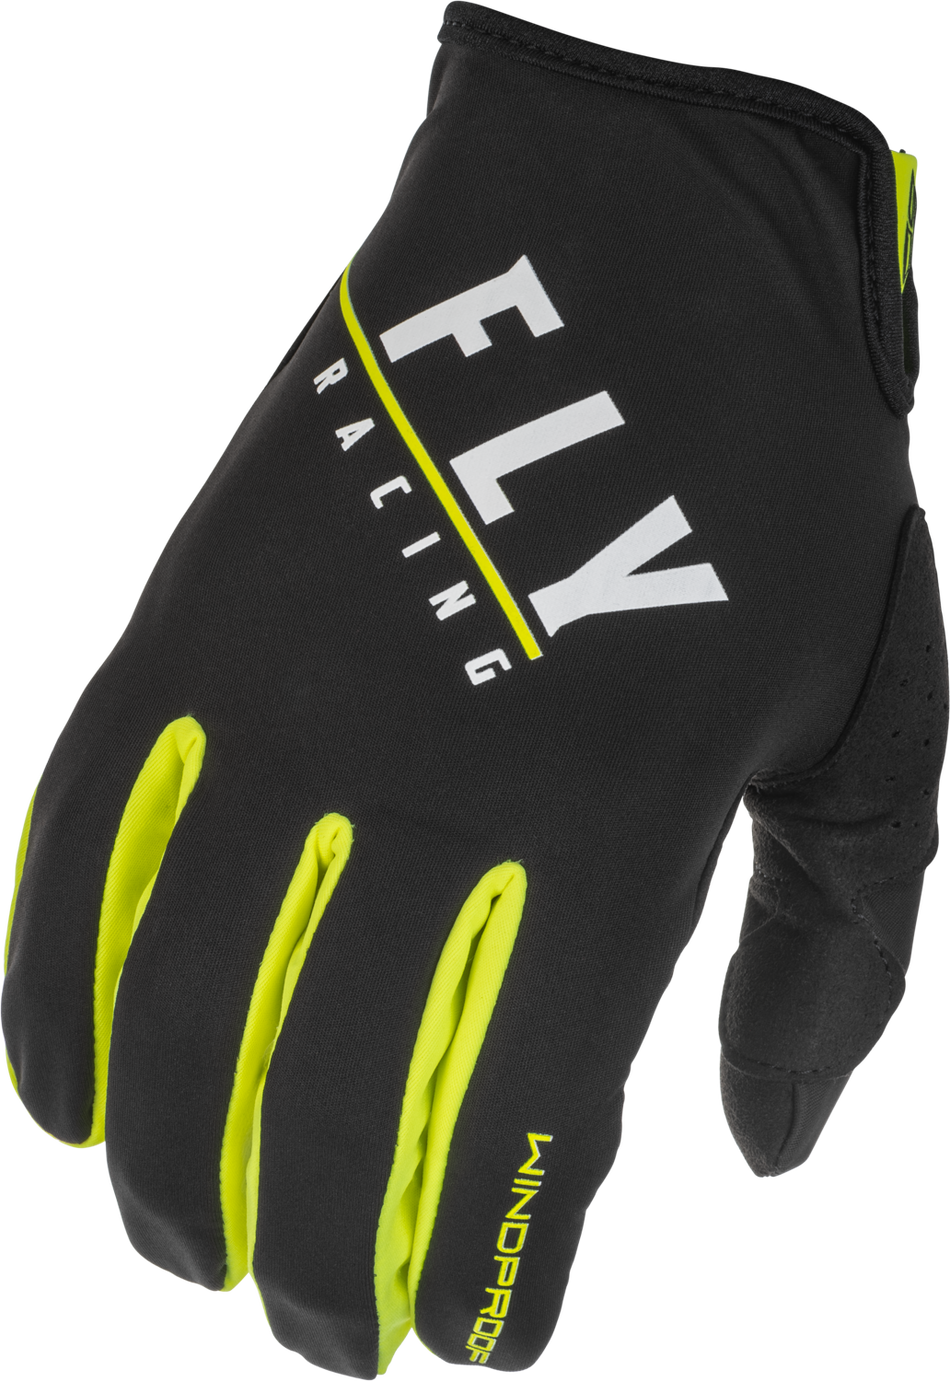 FLY RACING Windproof Gloves Black/Hi-Vis Sz 12 371-14212